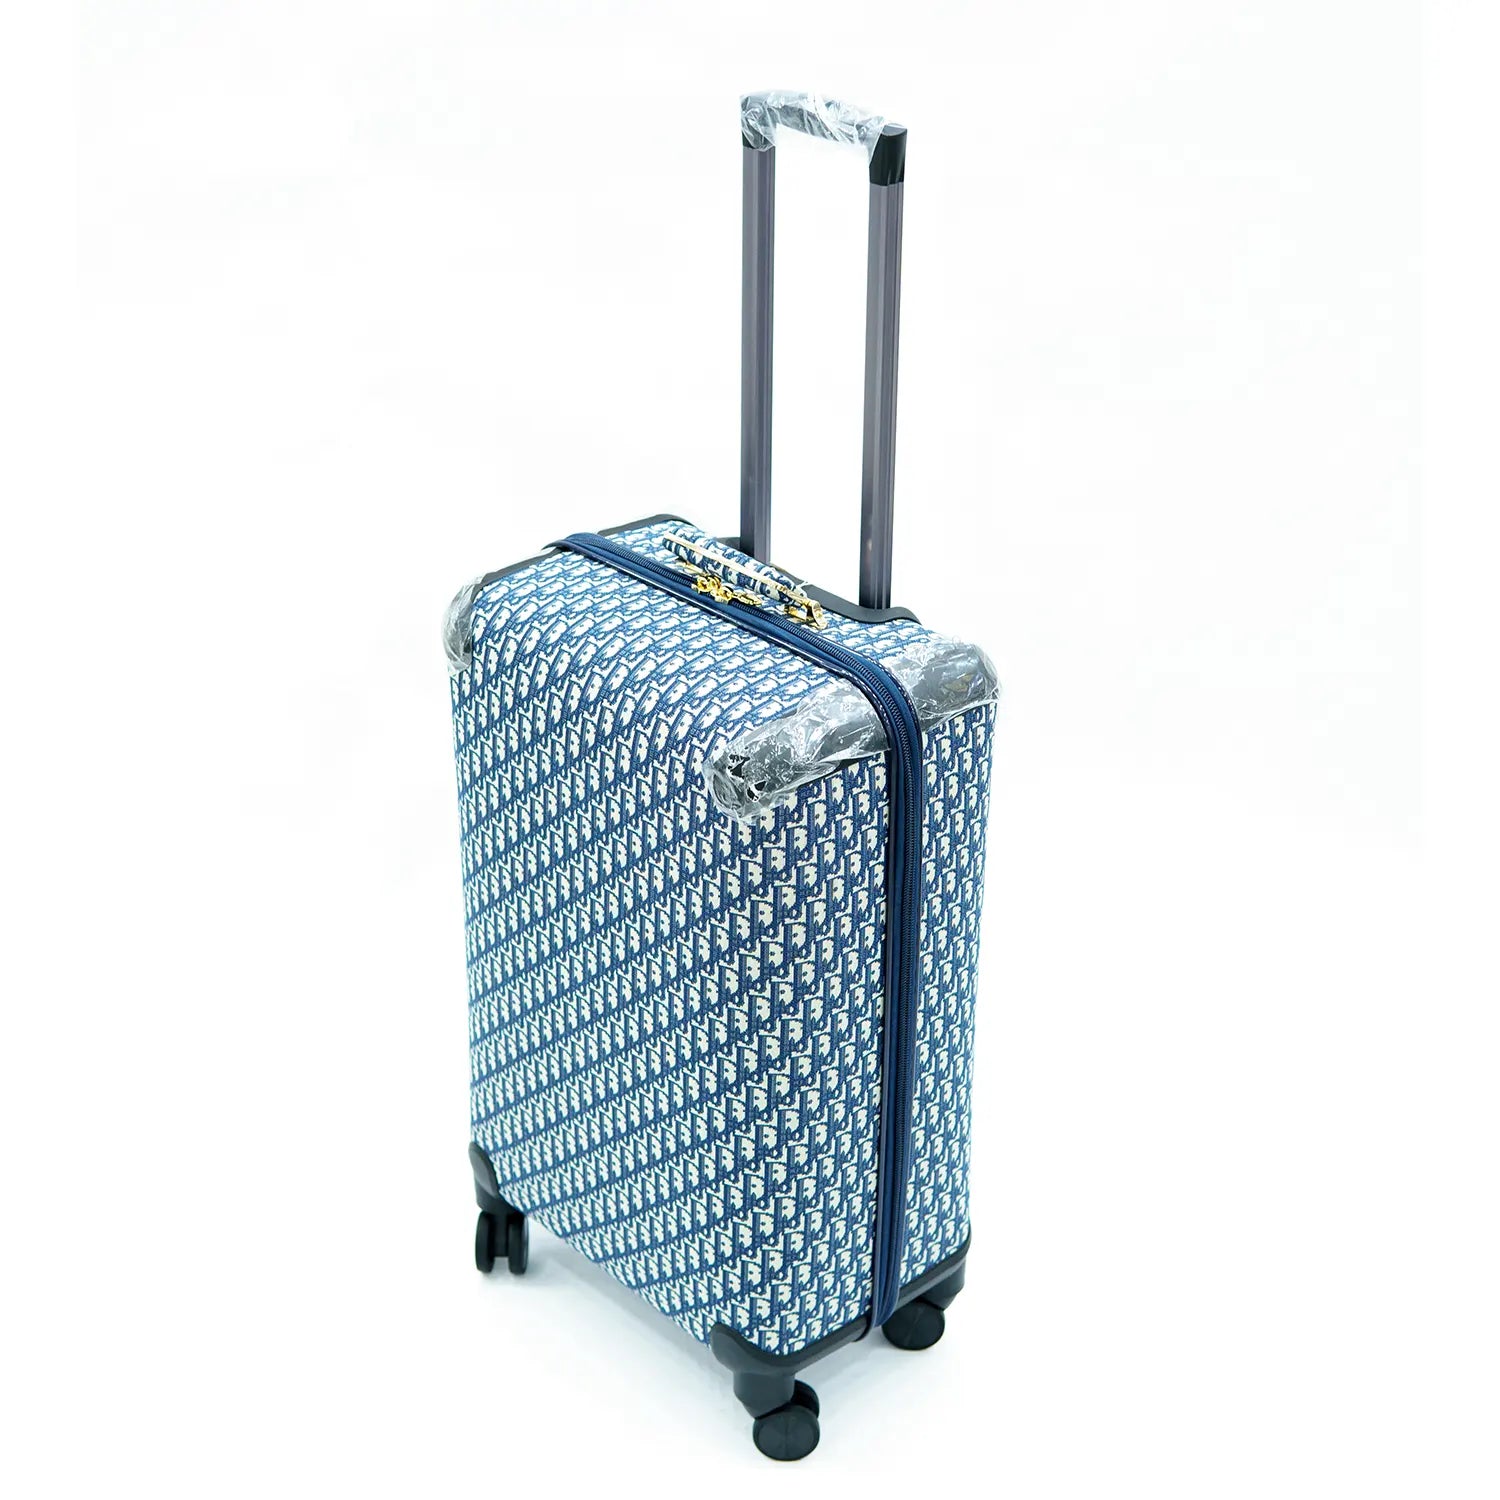 Journey in Luxury: Best-in-Class Suitcase for Effortless Traveling